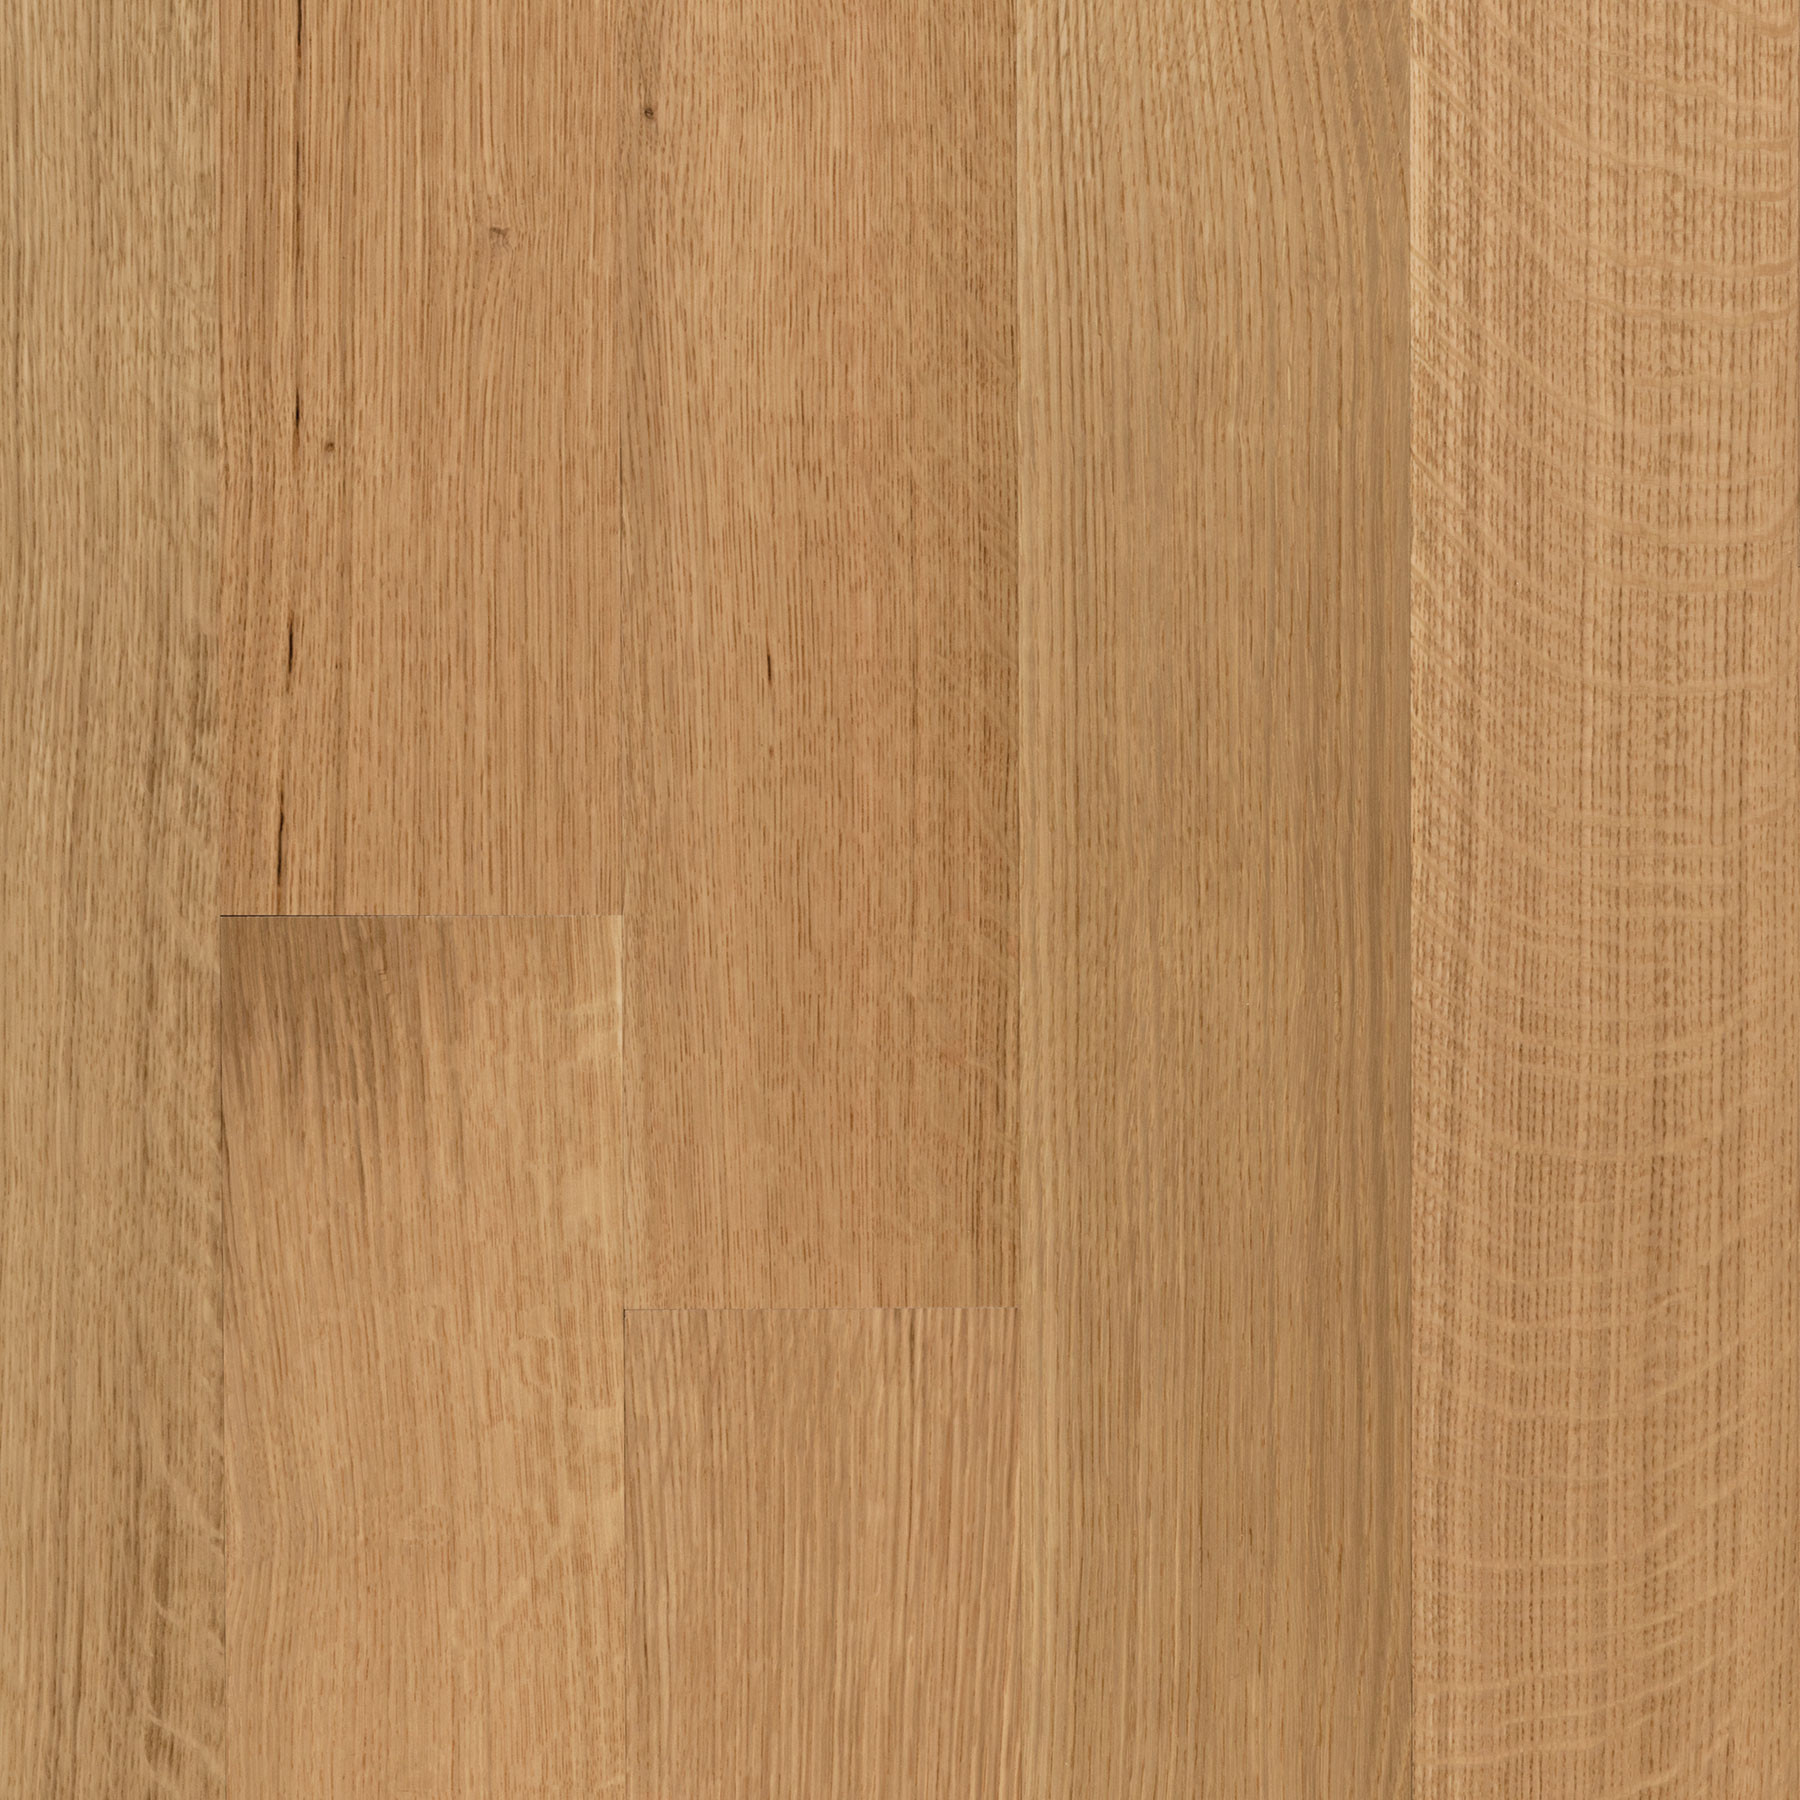 white oak hardwood flooring canada of american quartered white oak 5″ etx surfaces throughout american quartered white oak 5″